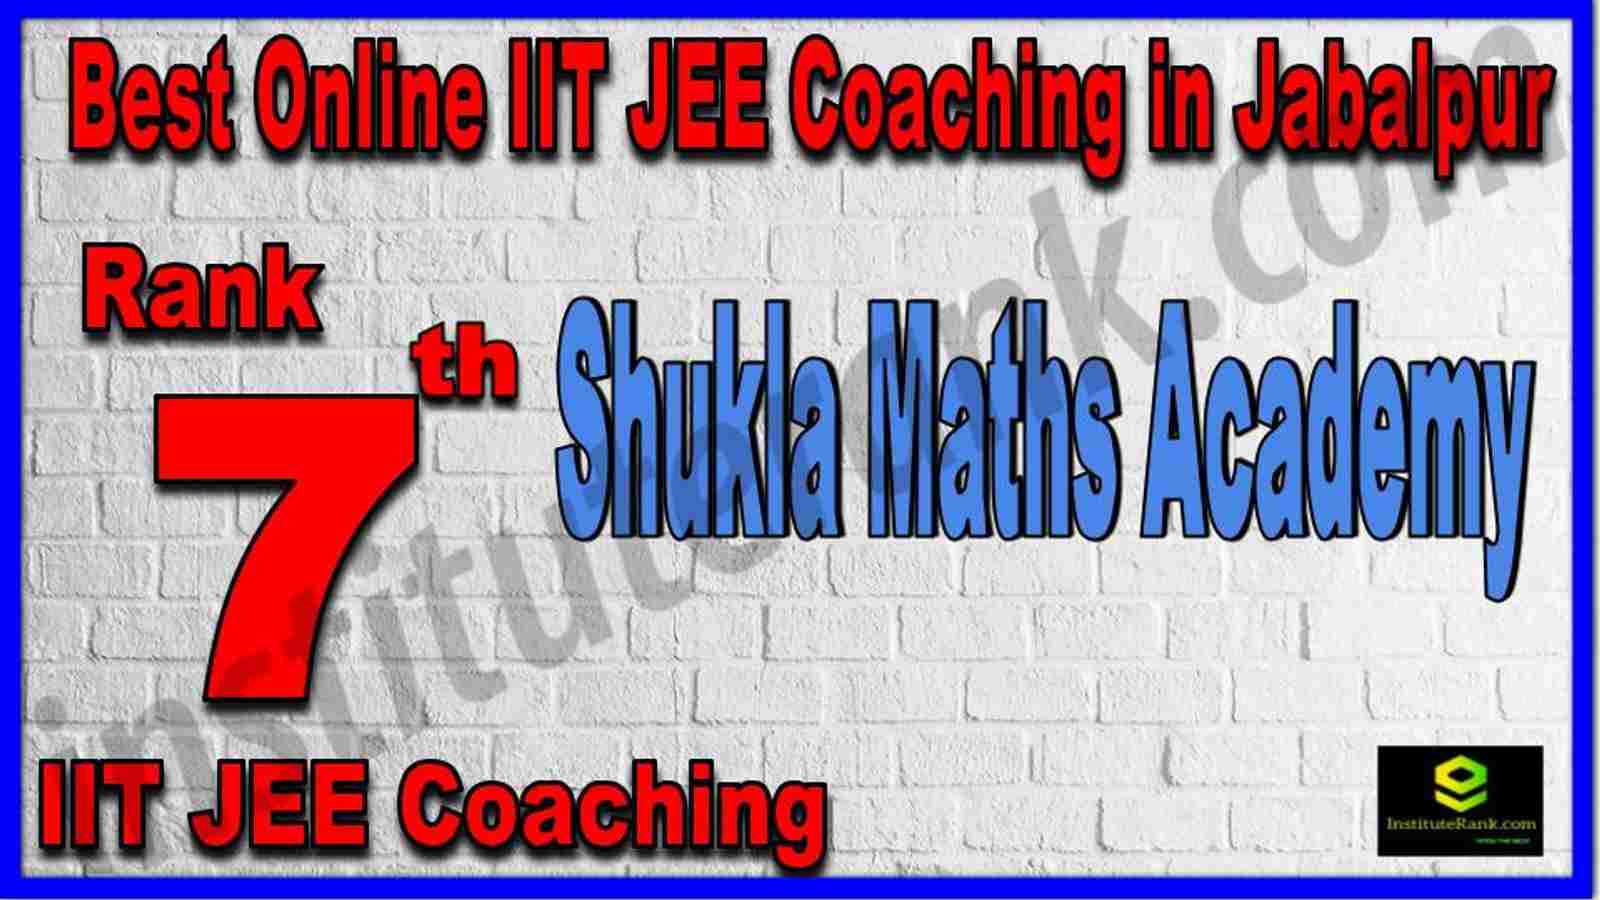 Rank 7th Best Online IIT JEE Coaching in Jabalpur